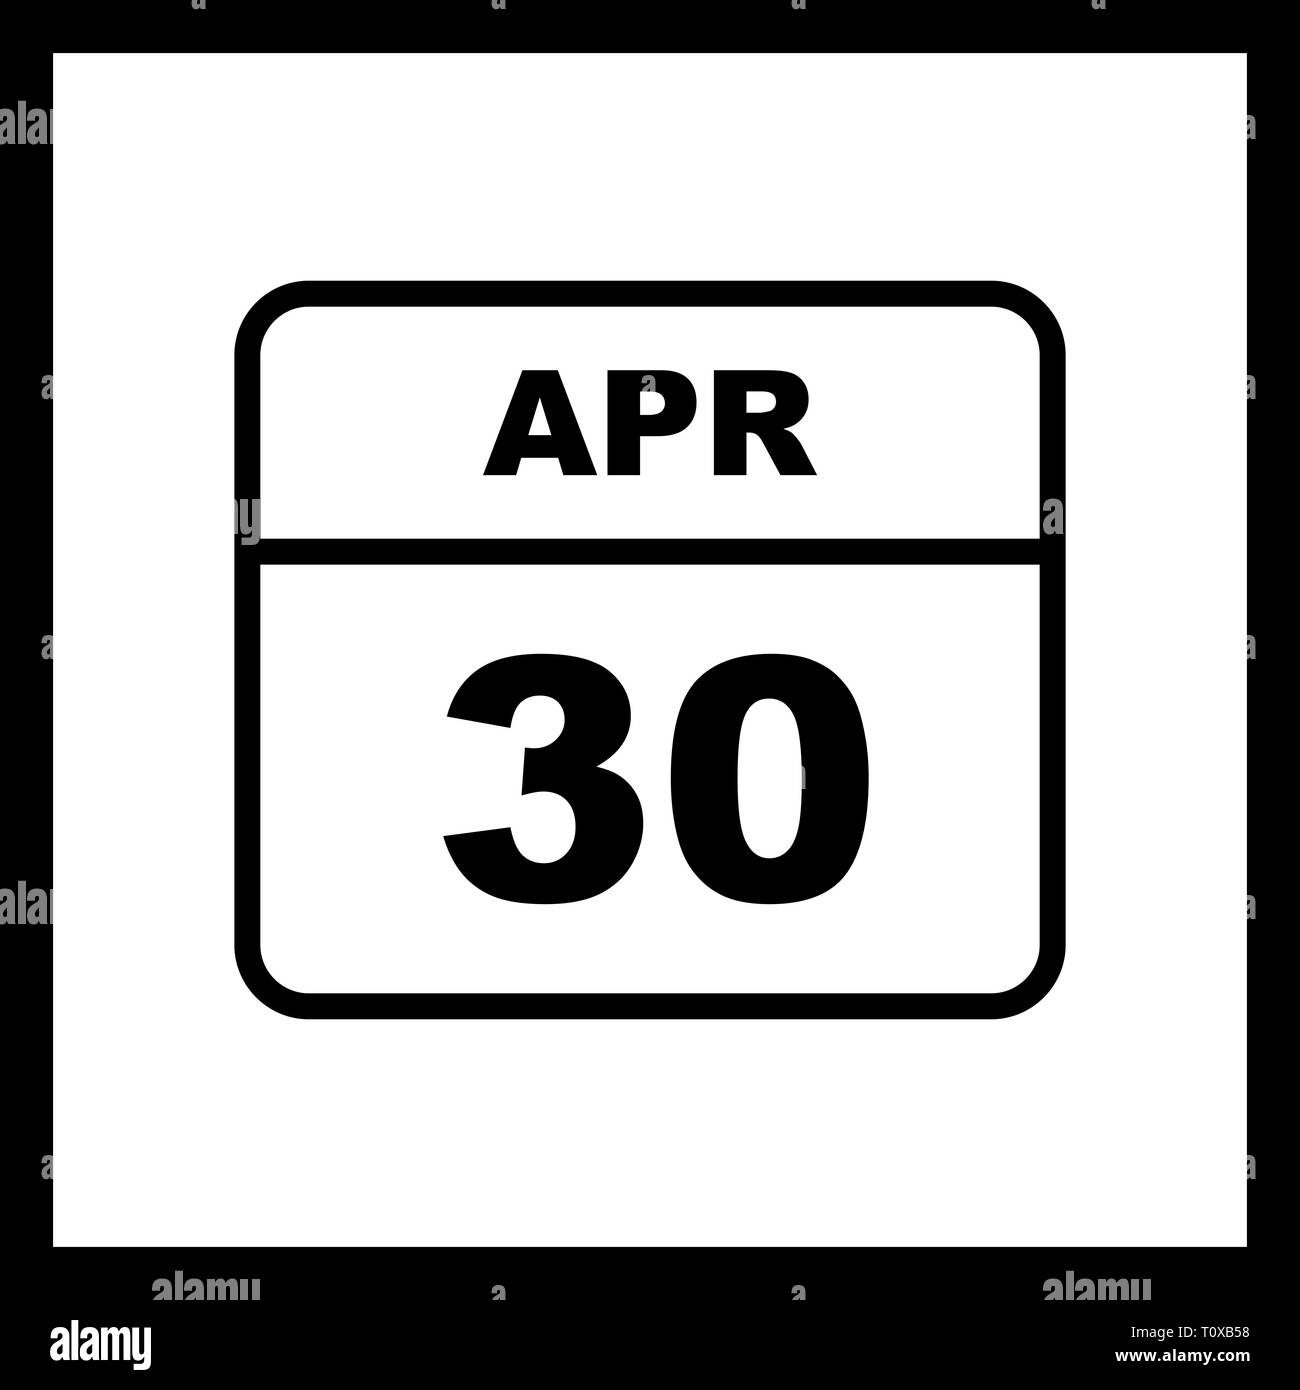 April 30th Date on a Single Day Calendar Stock Photo Alamy